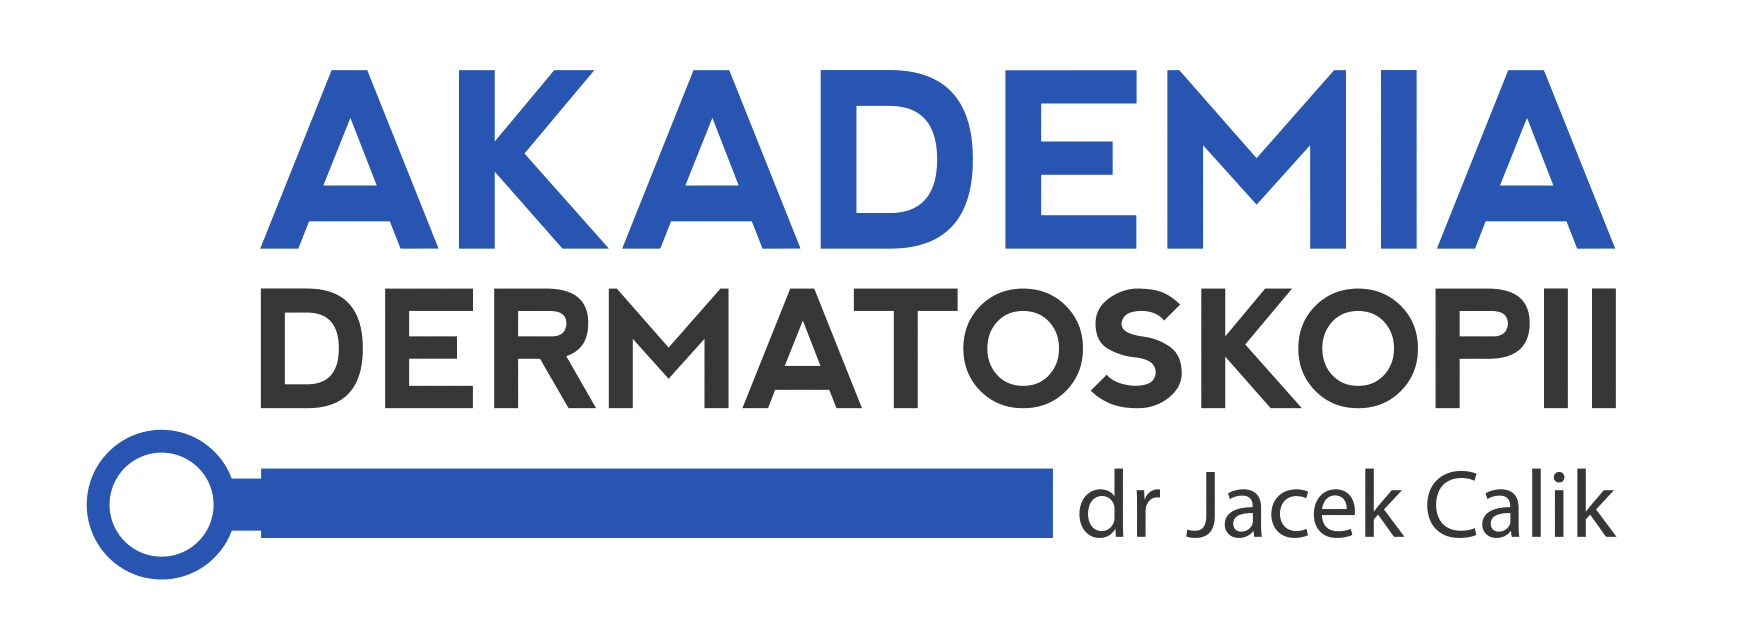 Akademia Dermatoskopii